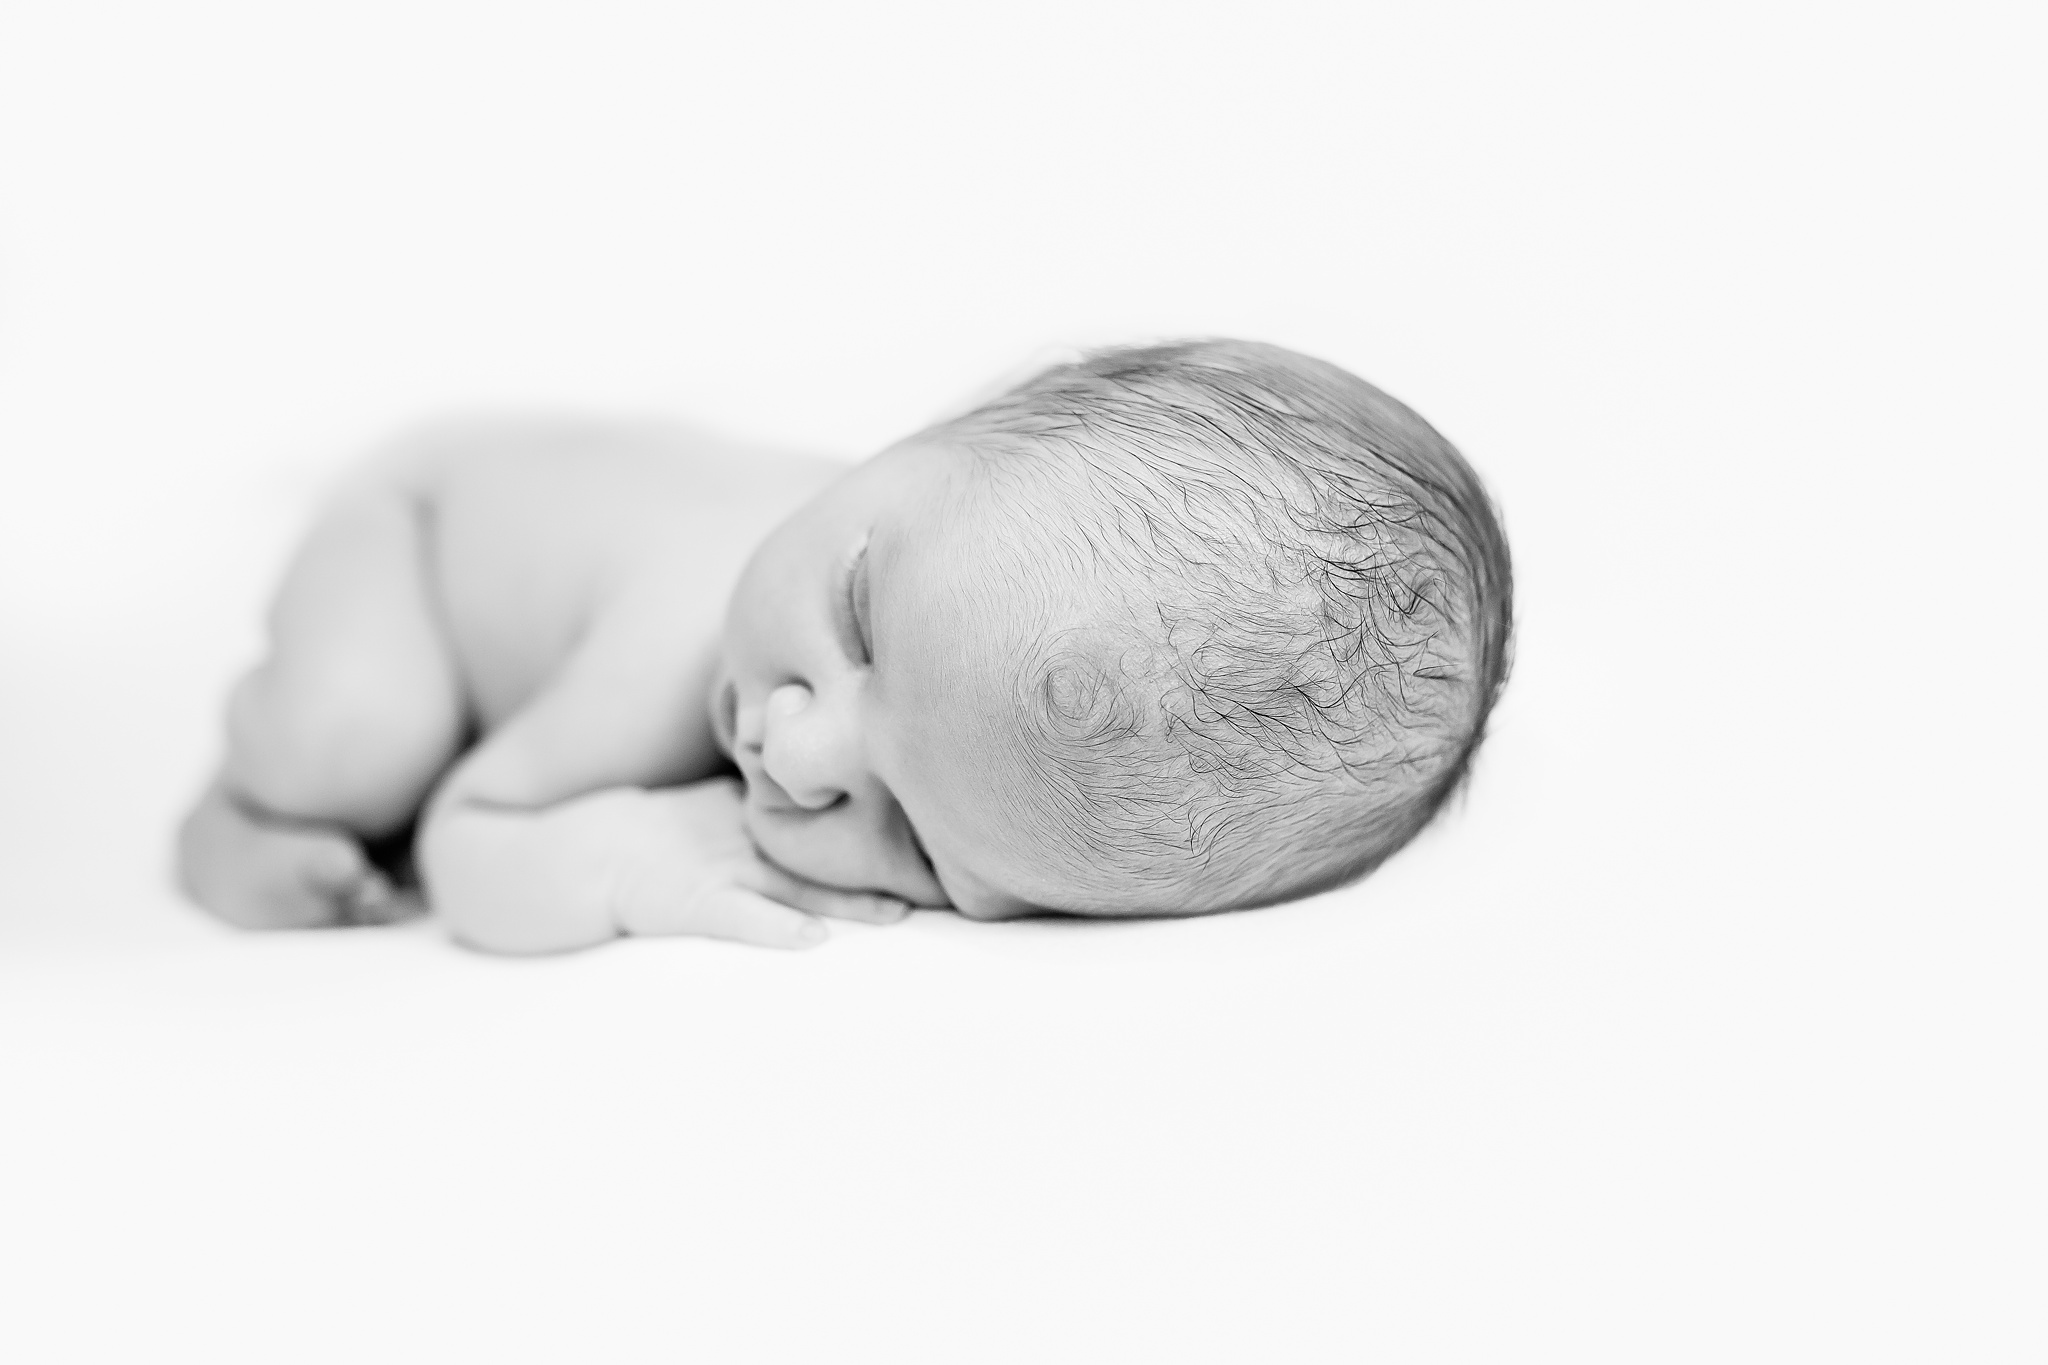 atlanta newborn studio photographer simple newborn photography